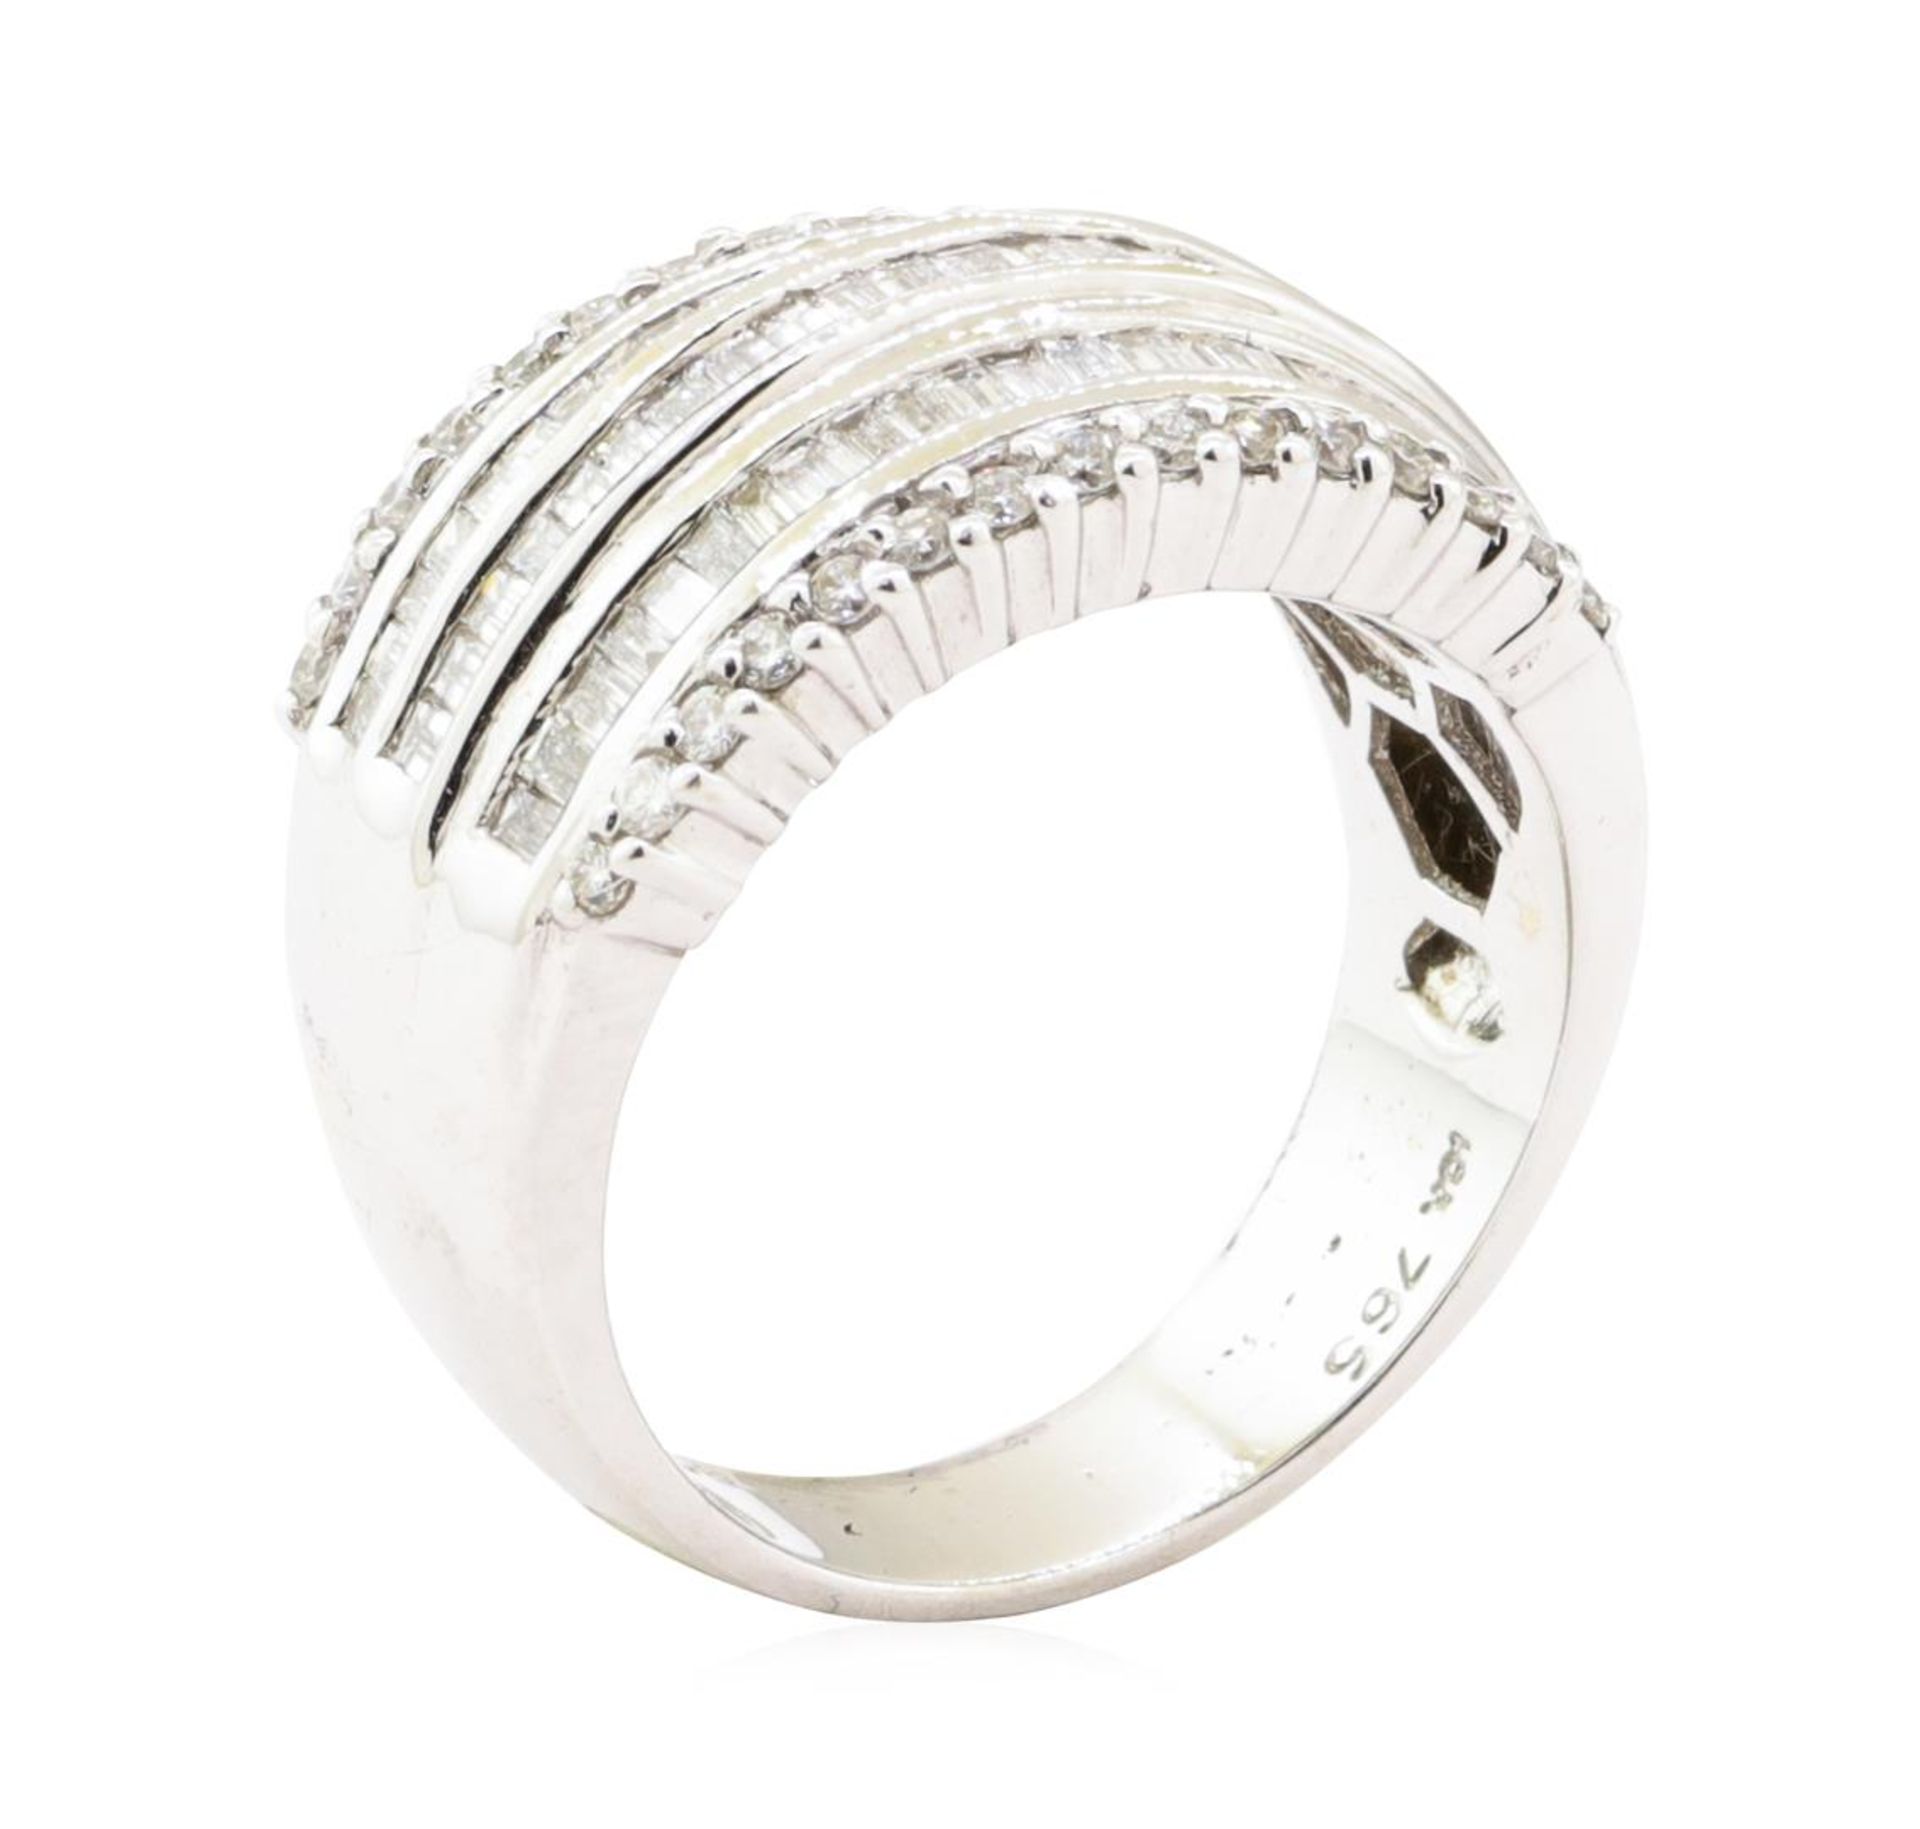 1.34 ctw Diamond Ring - 18KT White Gold - Image 4 of 4